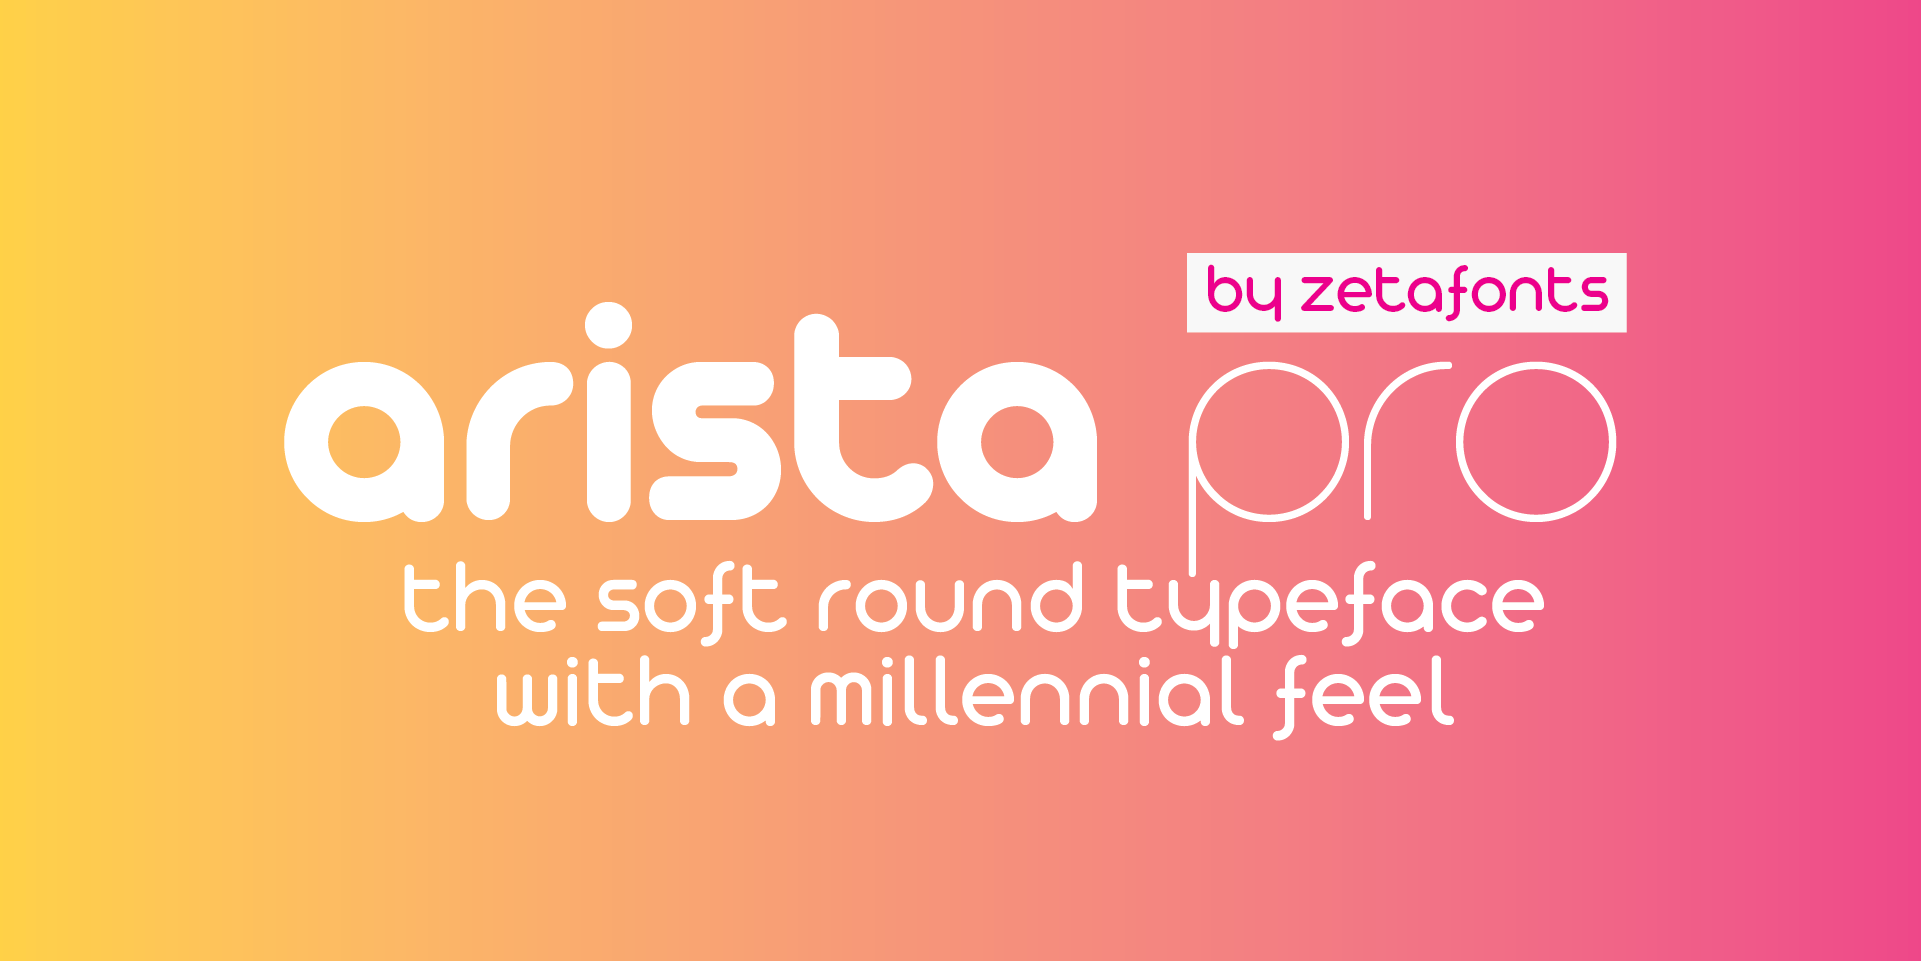 Arista Pro Typeface By Zetafonts